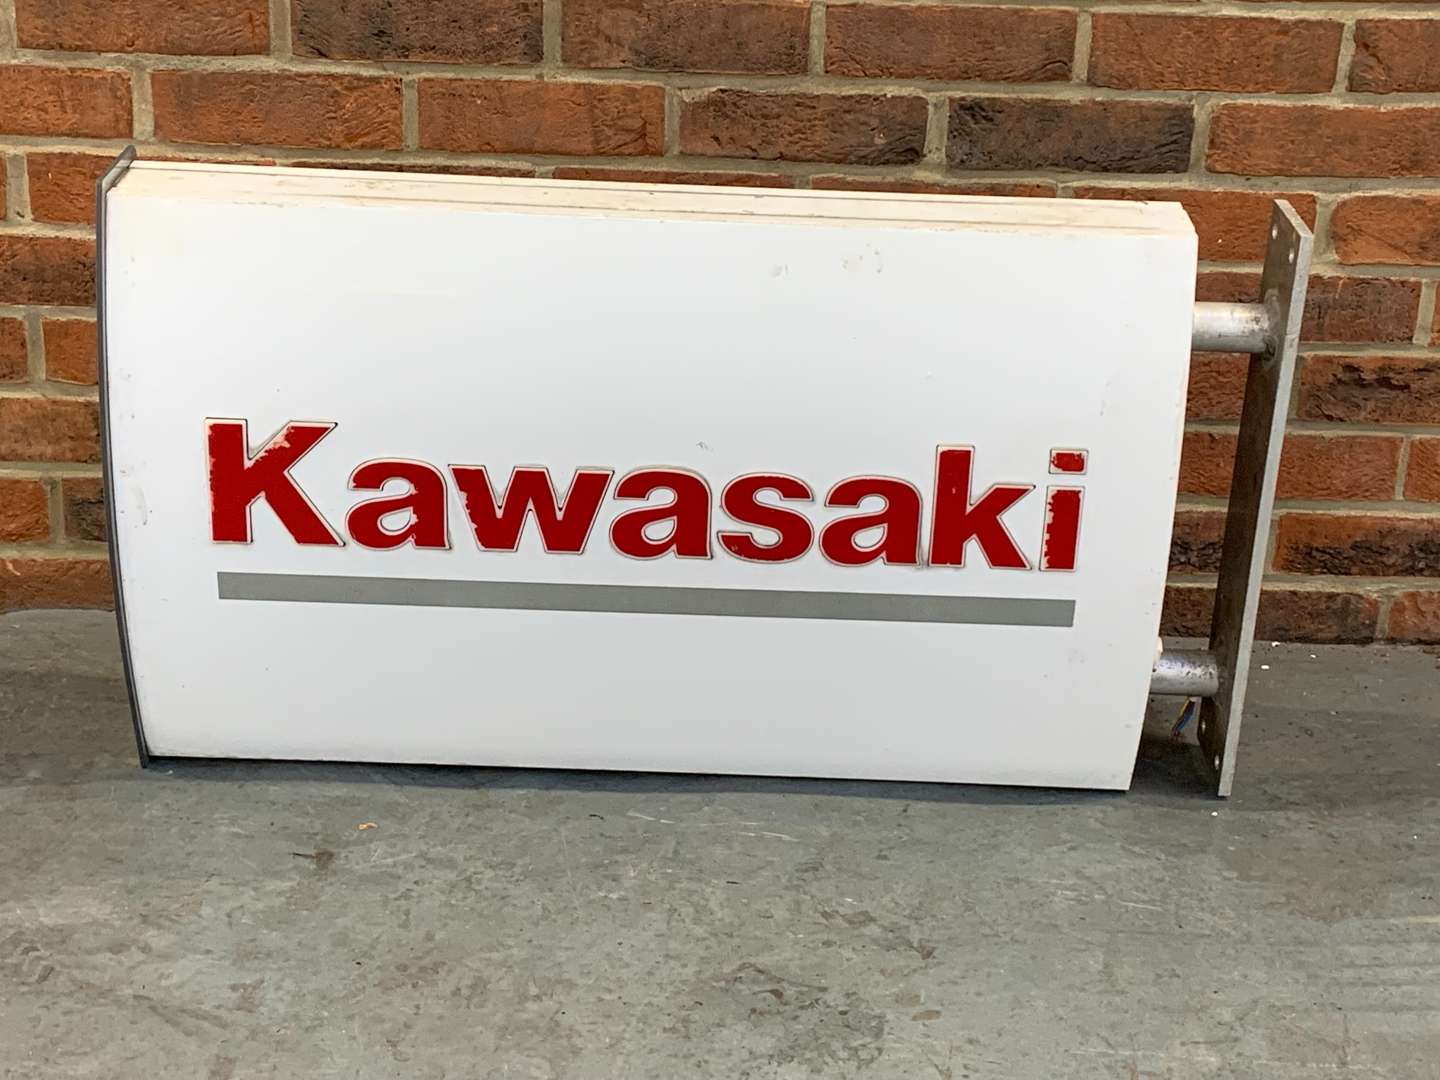 <p>Kawasaki Motorbike Dealership Sign</p>